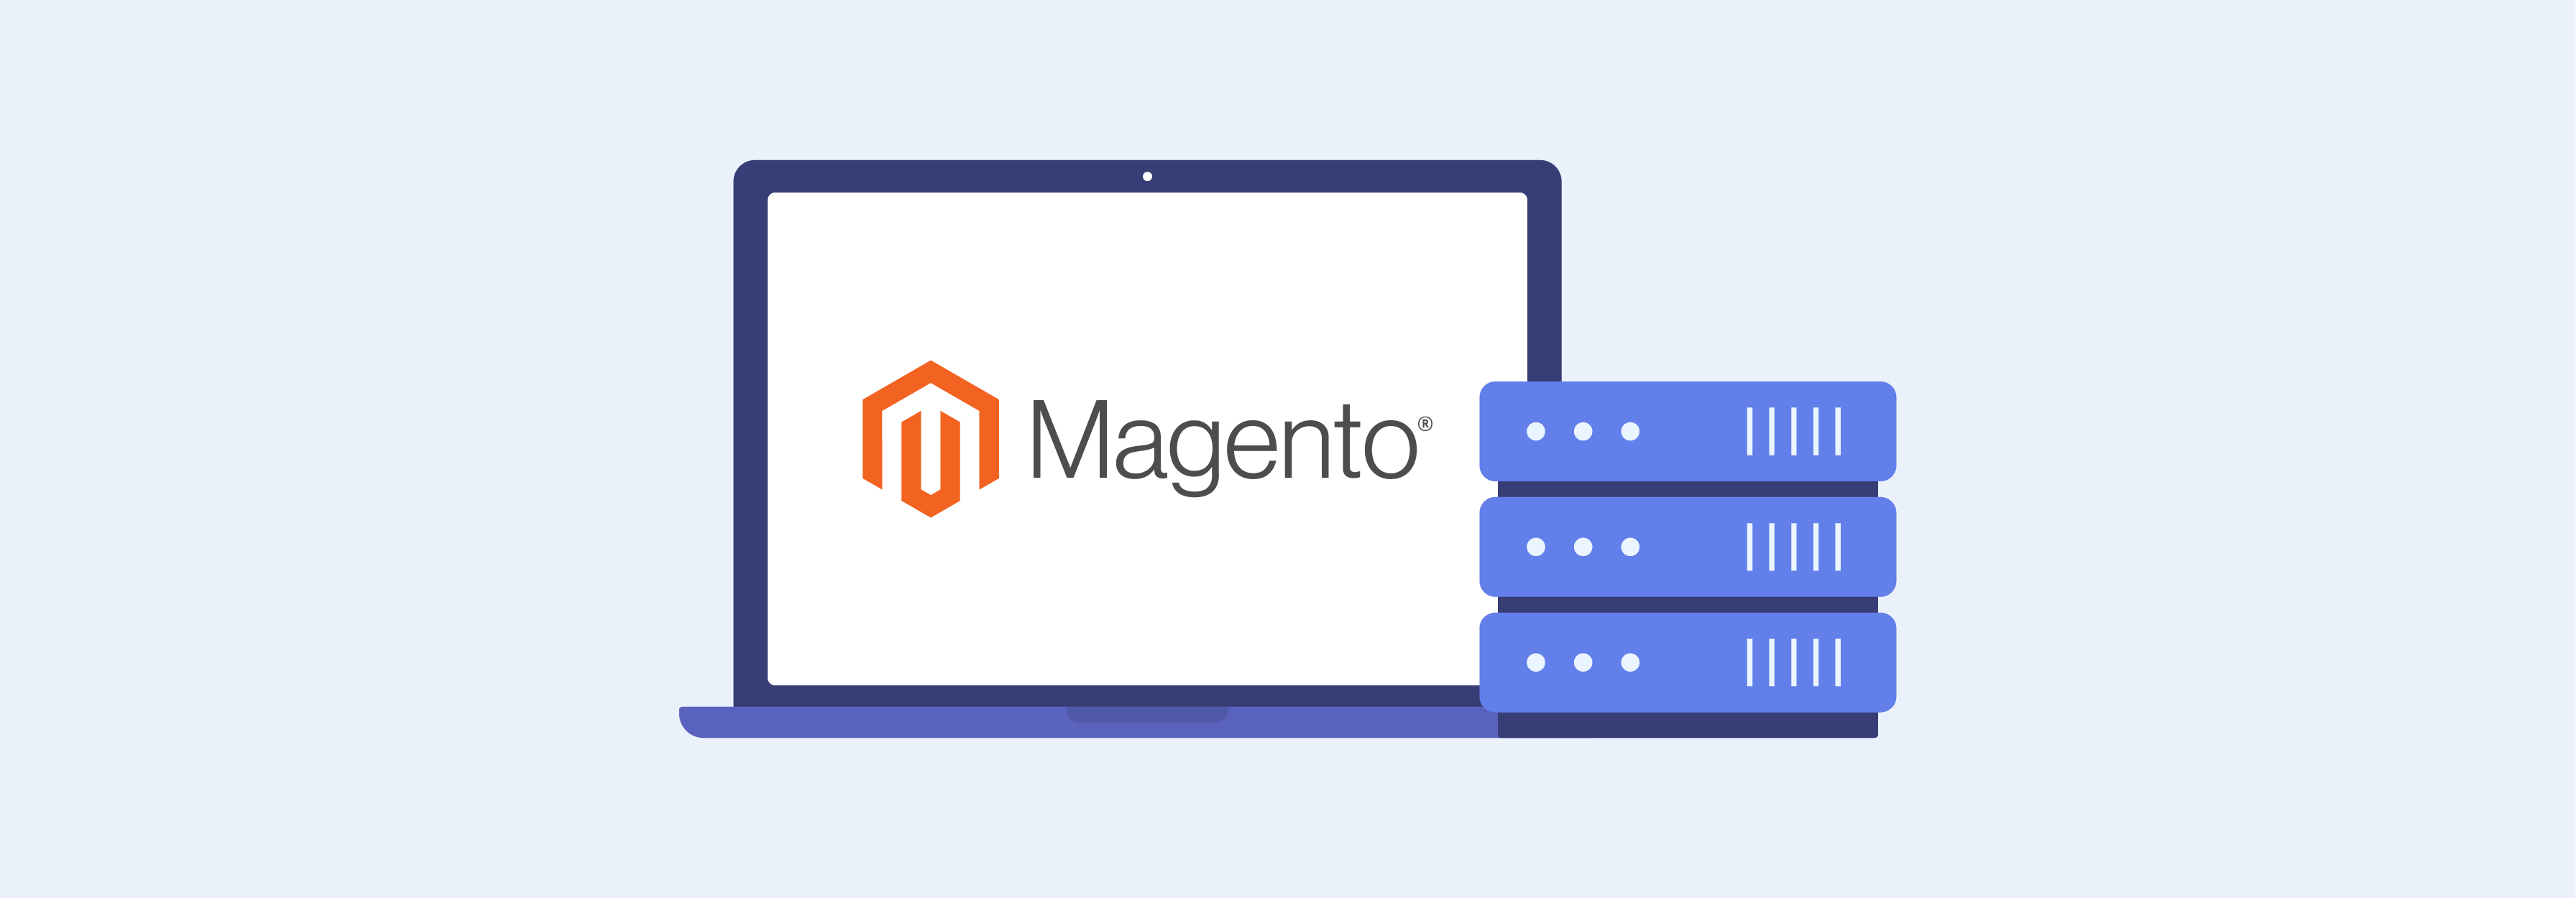 Overview of Magento Hosting for E-commerce Websites